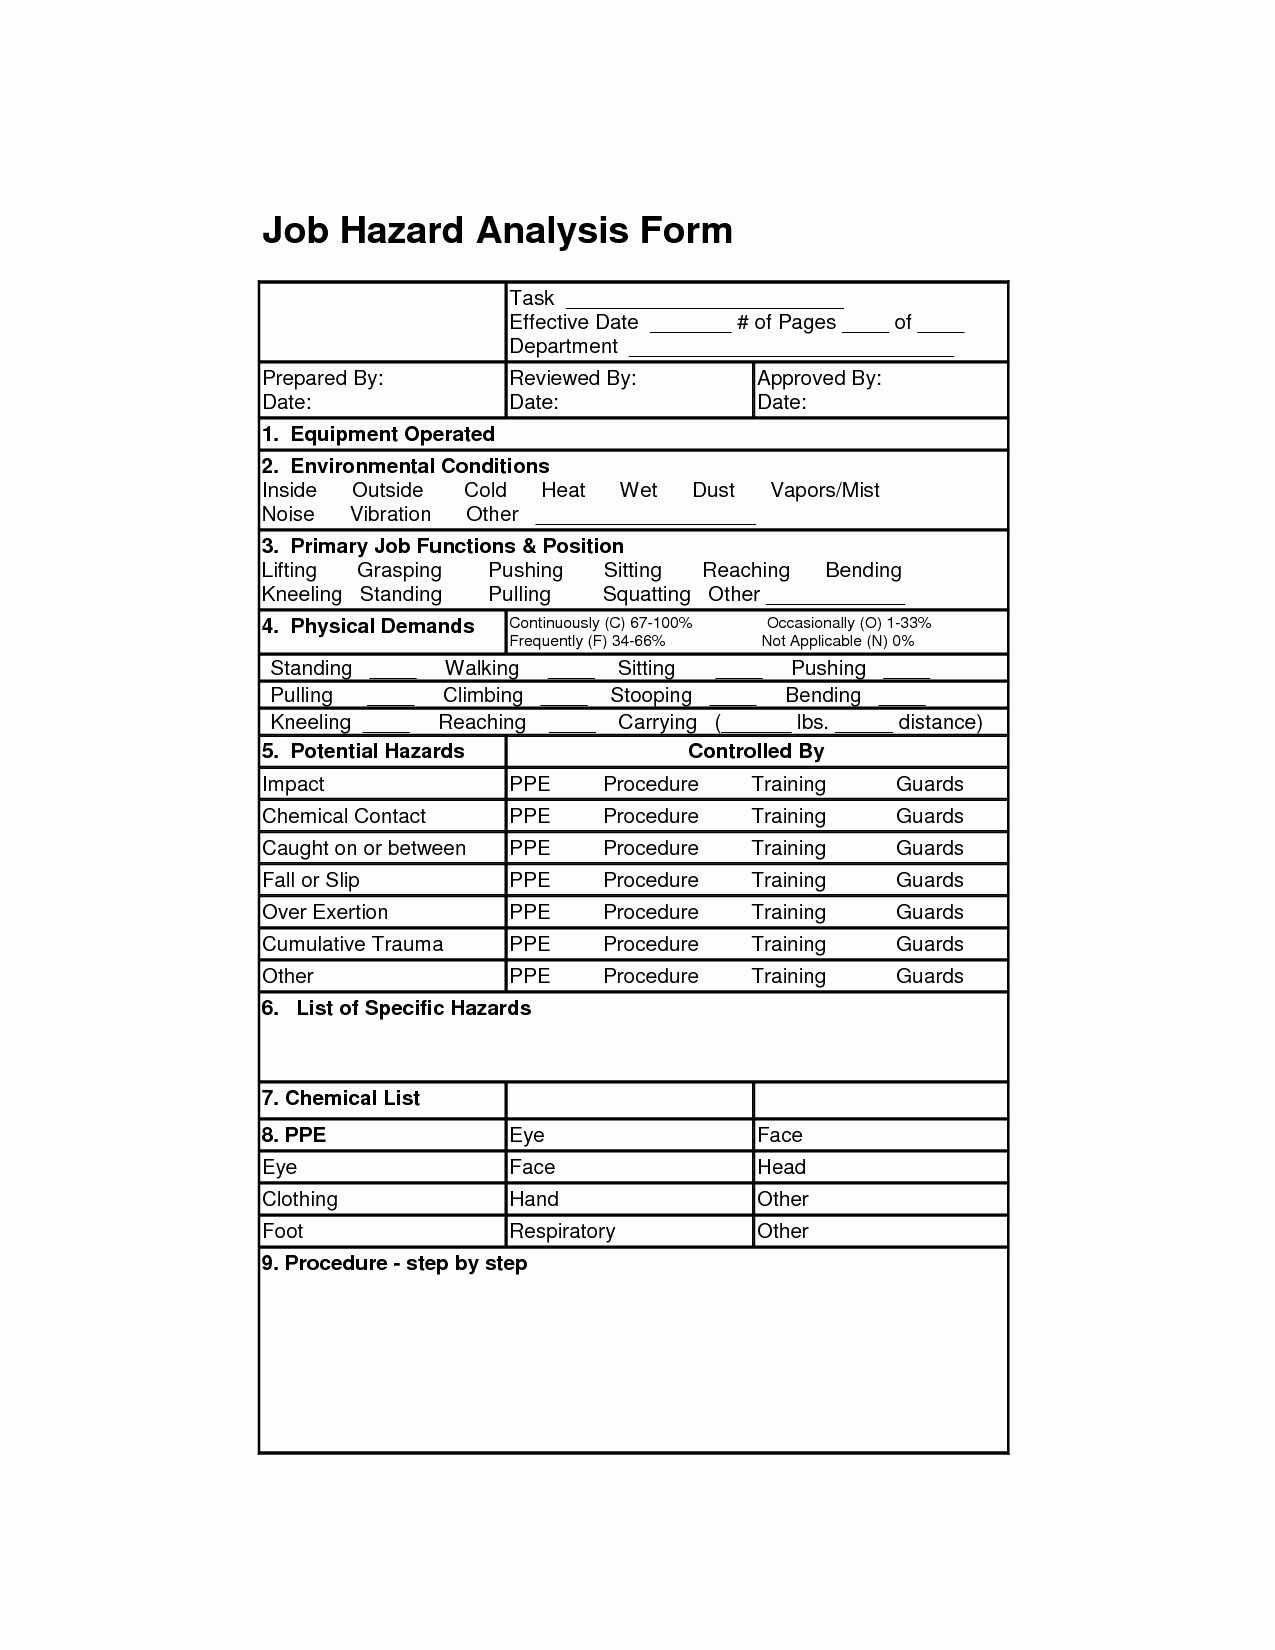 Job Safety Analysis Example Fresh Job Hazard Analysis form Job Analysis forms